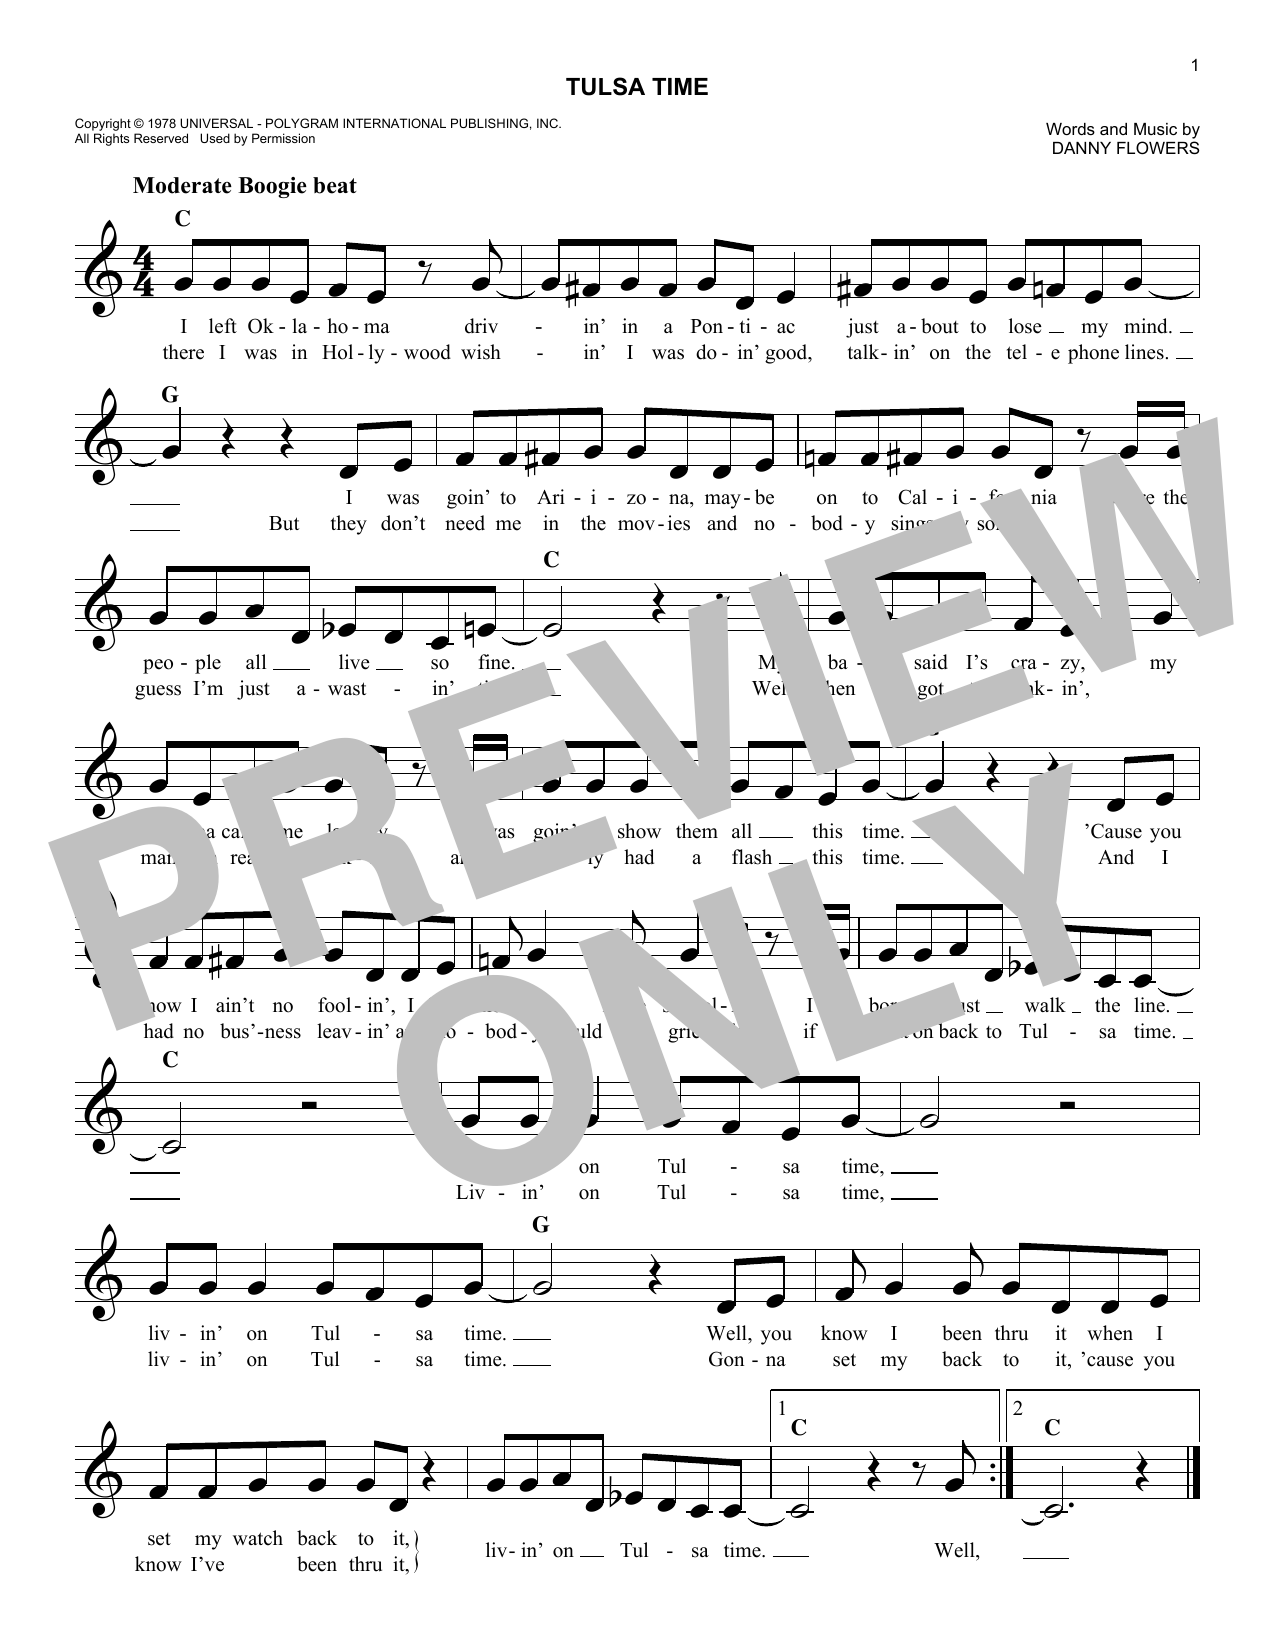 hule barrikade sovjetisk Don Williams "Tulsa Time" Sheet Music Notes | Download Printable PDF Score  103344